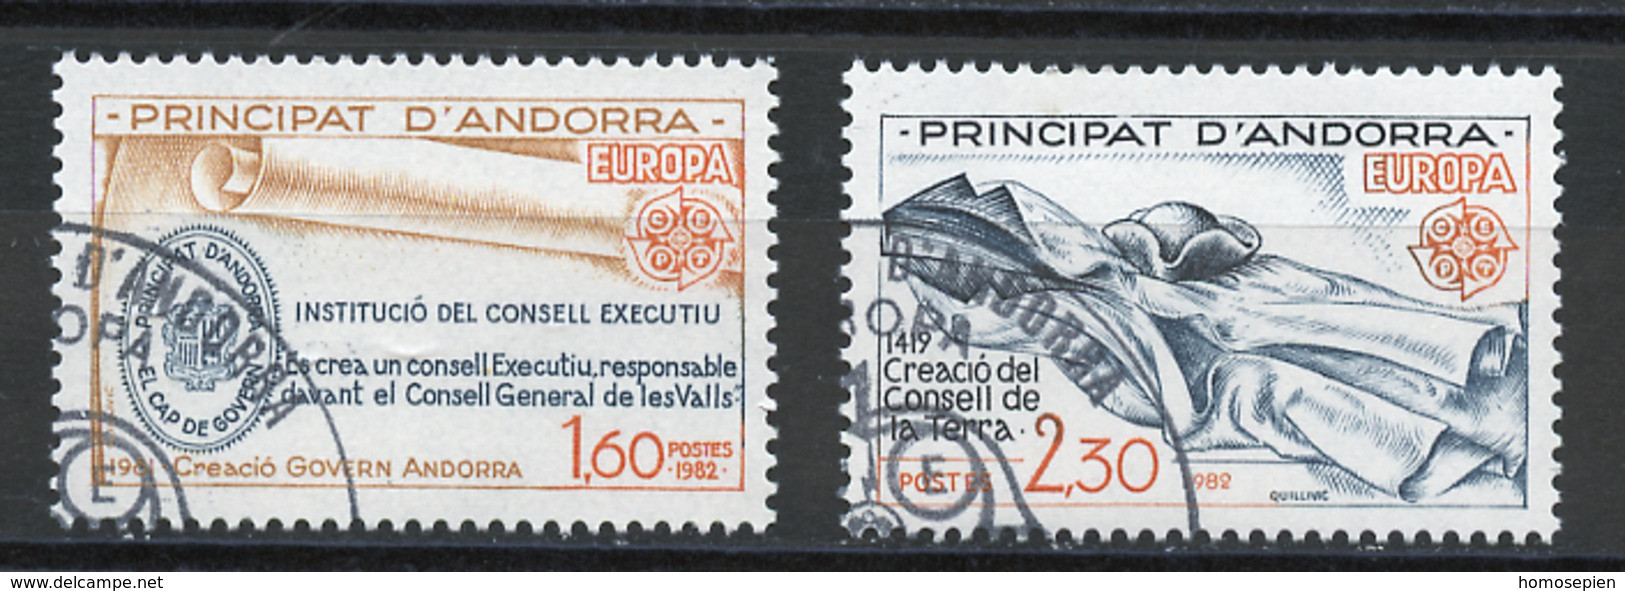 Europa CEPT 1982 Andorre Français - Andorra Y&T N°300 à 301 - Michel N°321 à 322 (o) - 1982